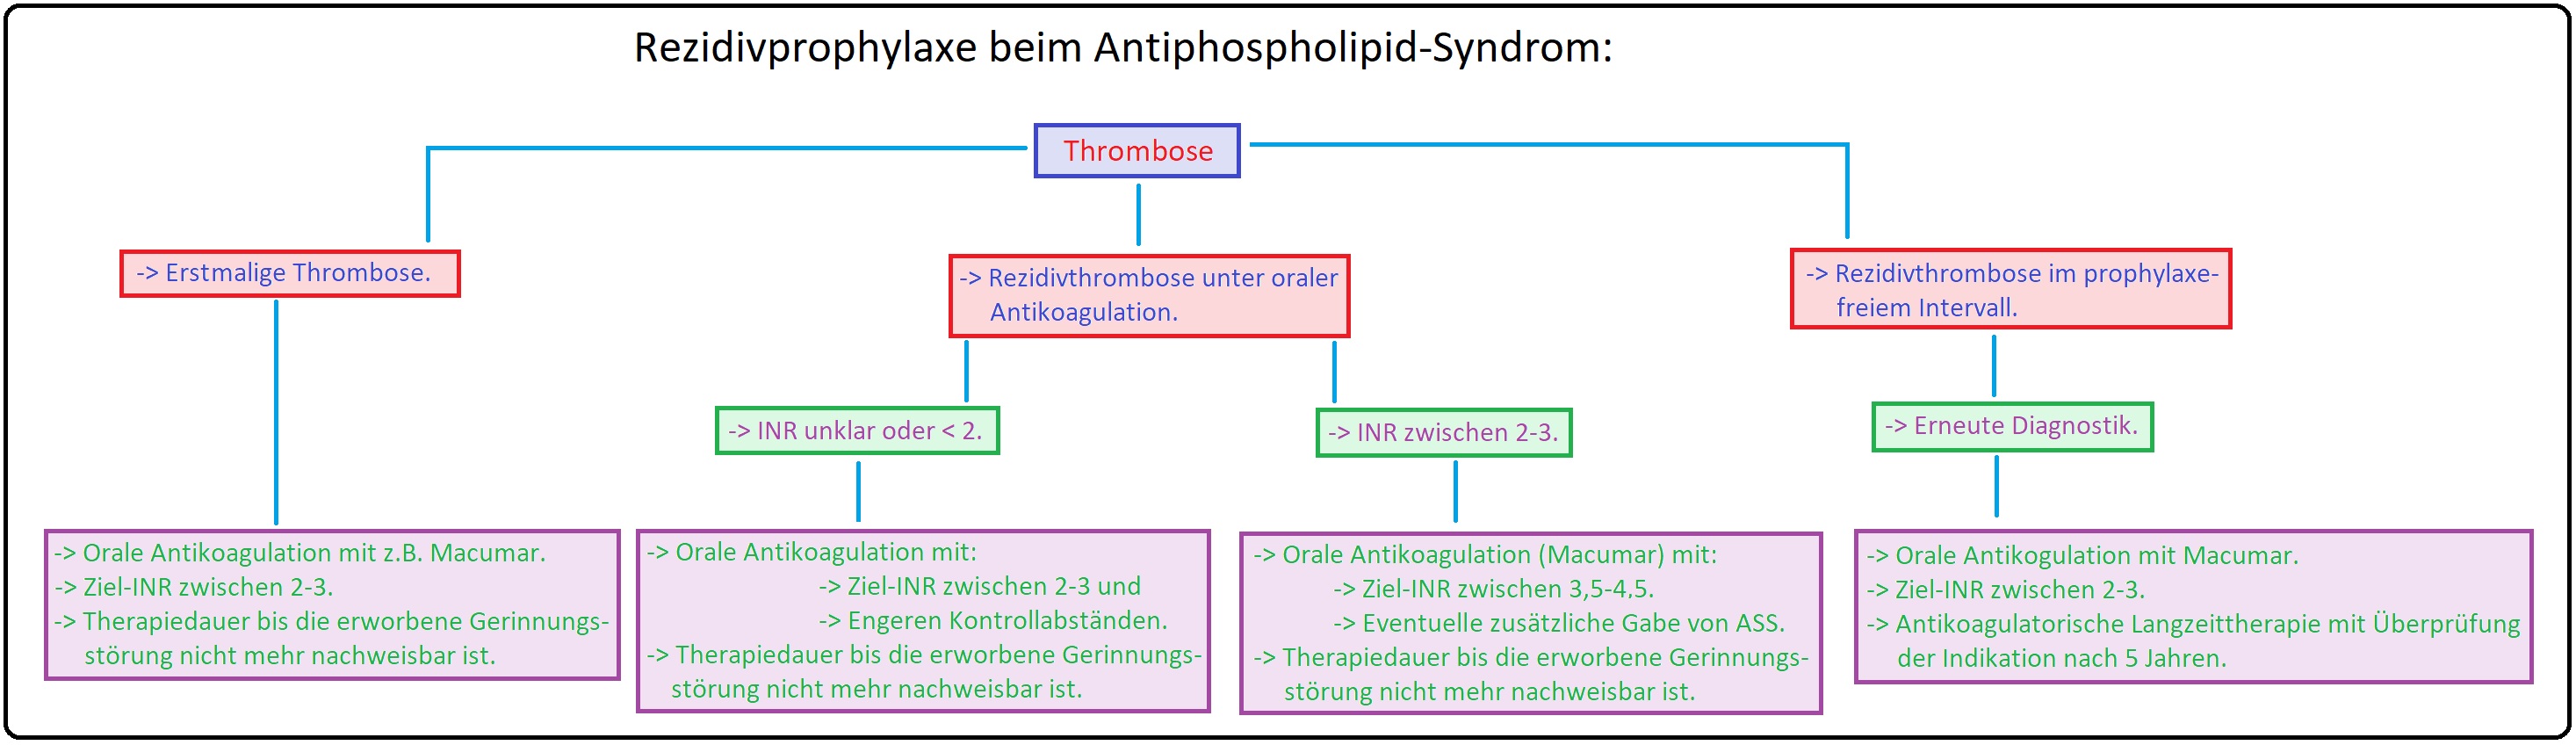 1109 Rezidivprophylaxe beim Antiphospholipid Syndrom